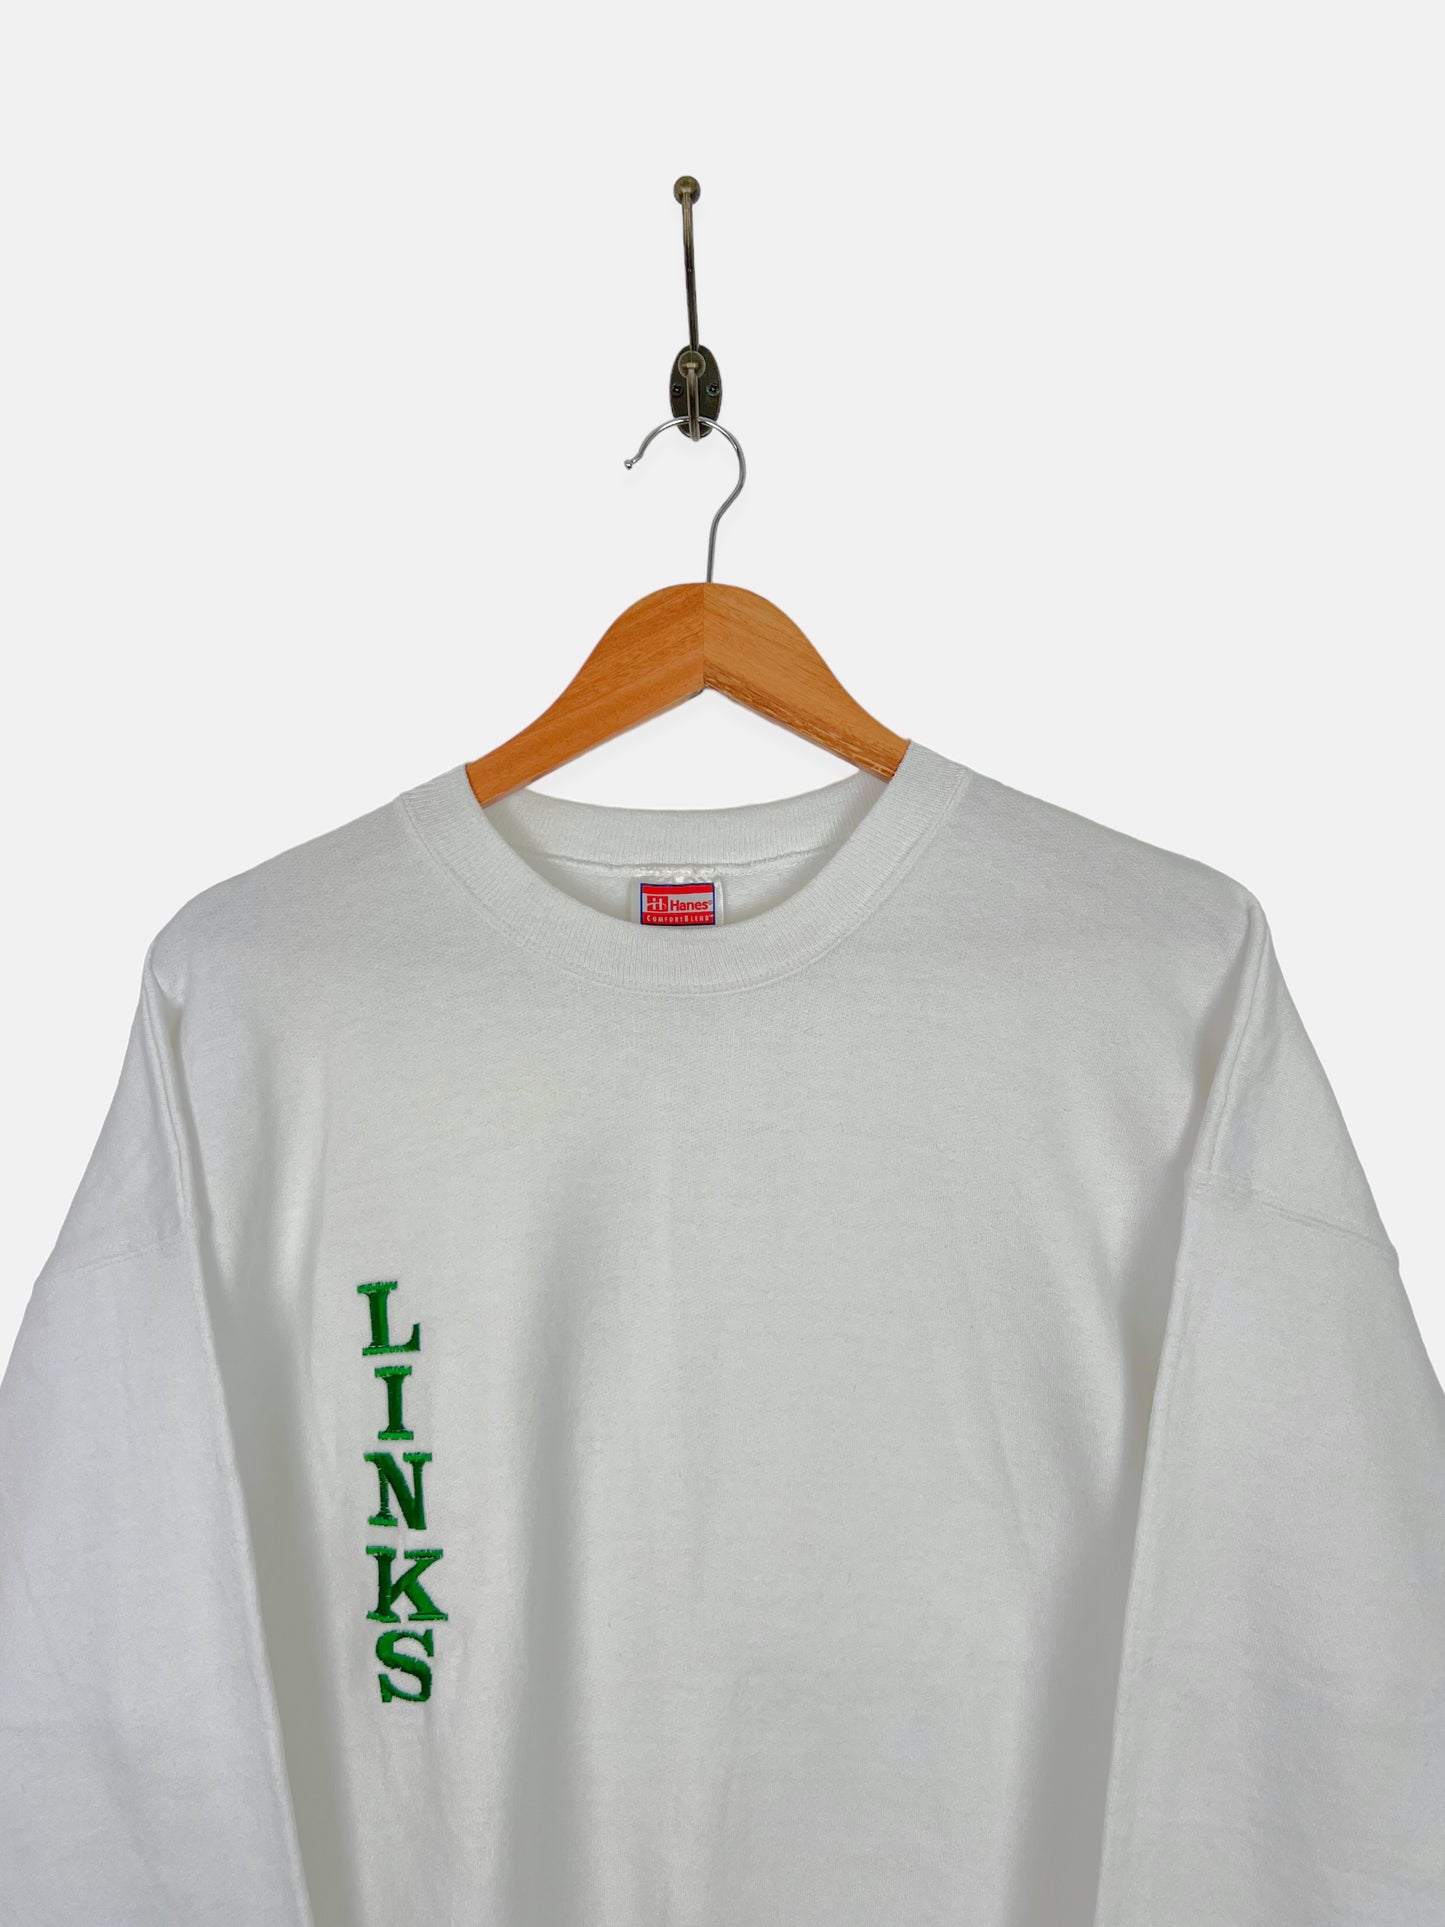 90's Golf Links Embroidered Vintage Sweatshirt Size L